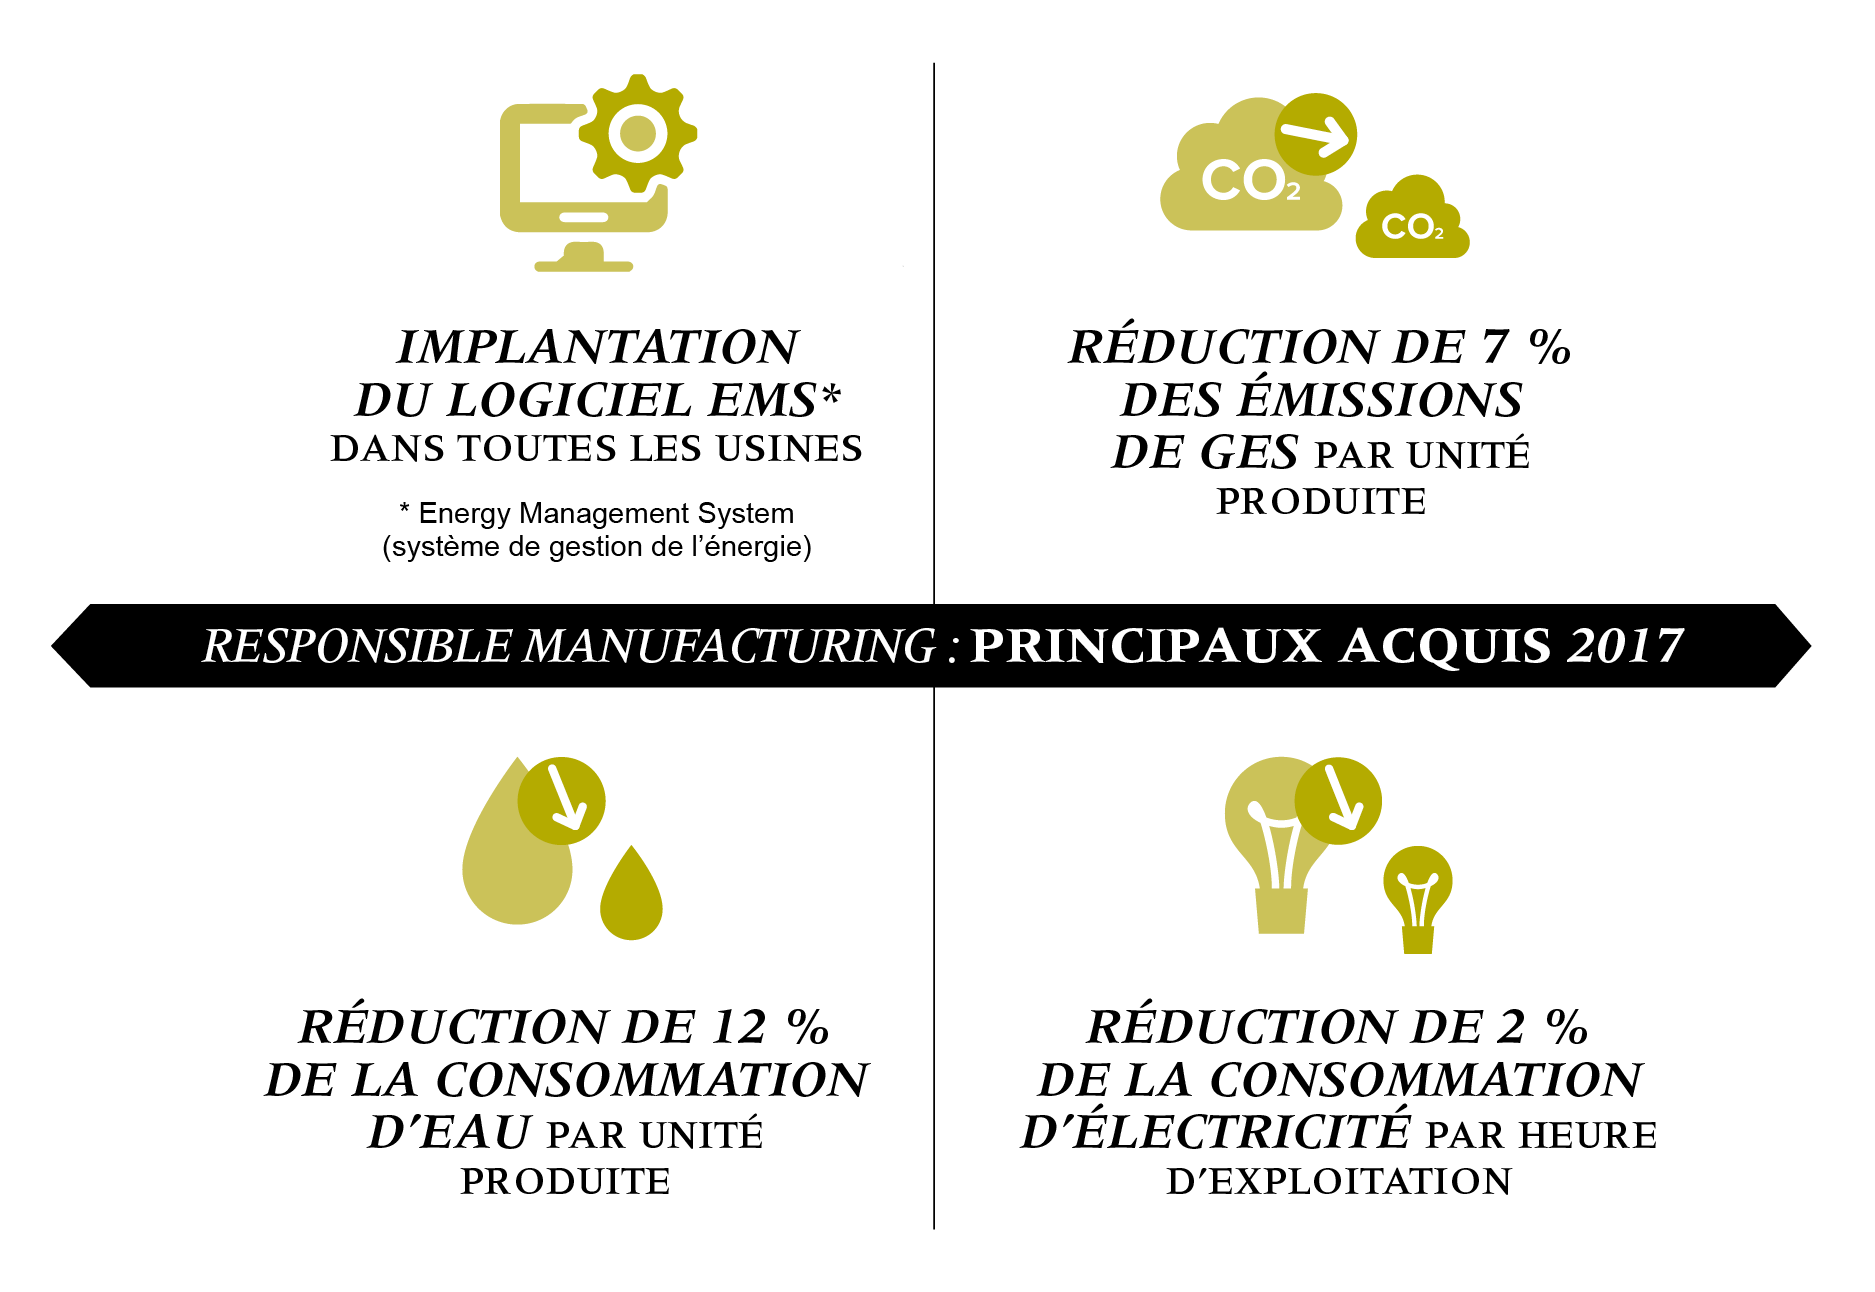 Responsible manufacturing : Principaux acquis 2017